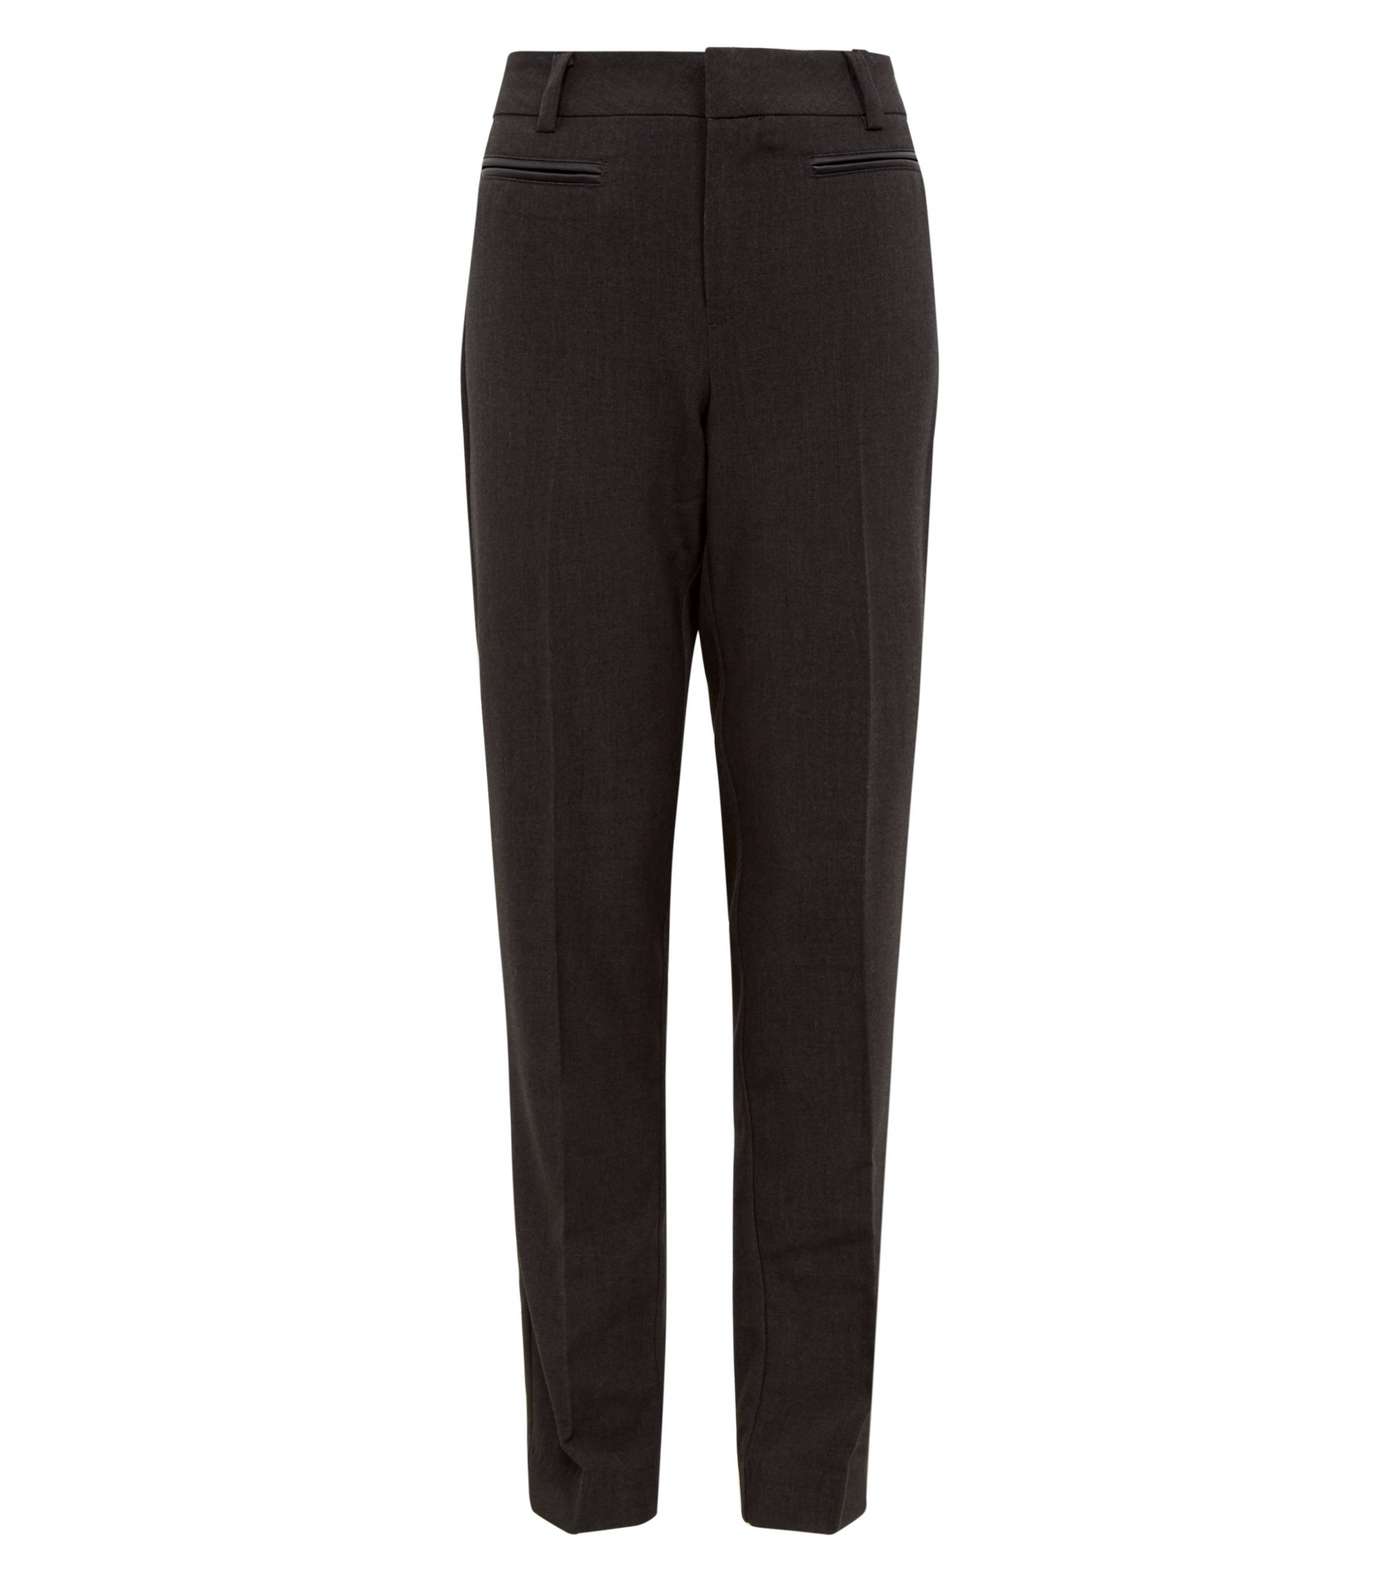 Girls Grey Leather-Look Trim School Trousers Image 4